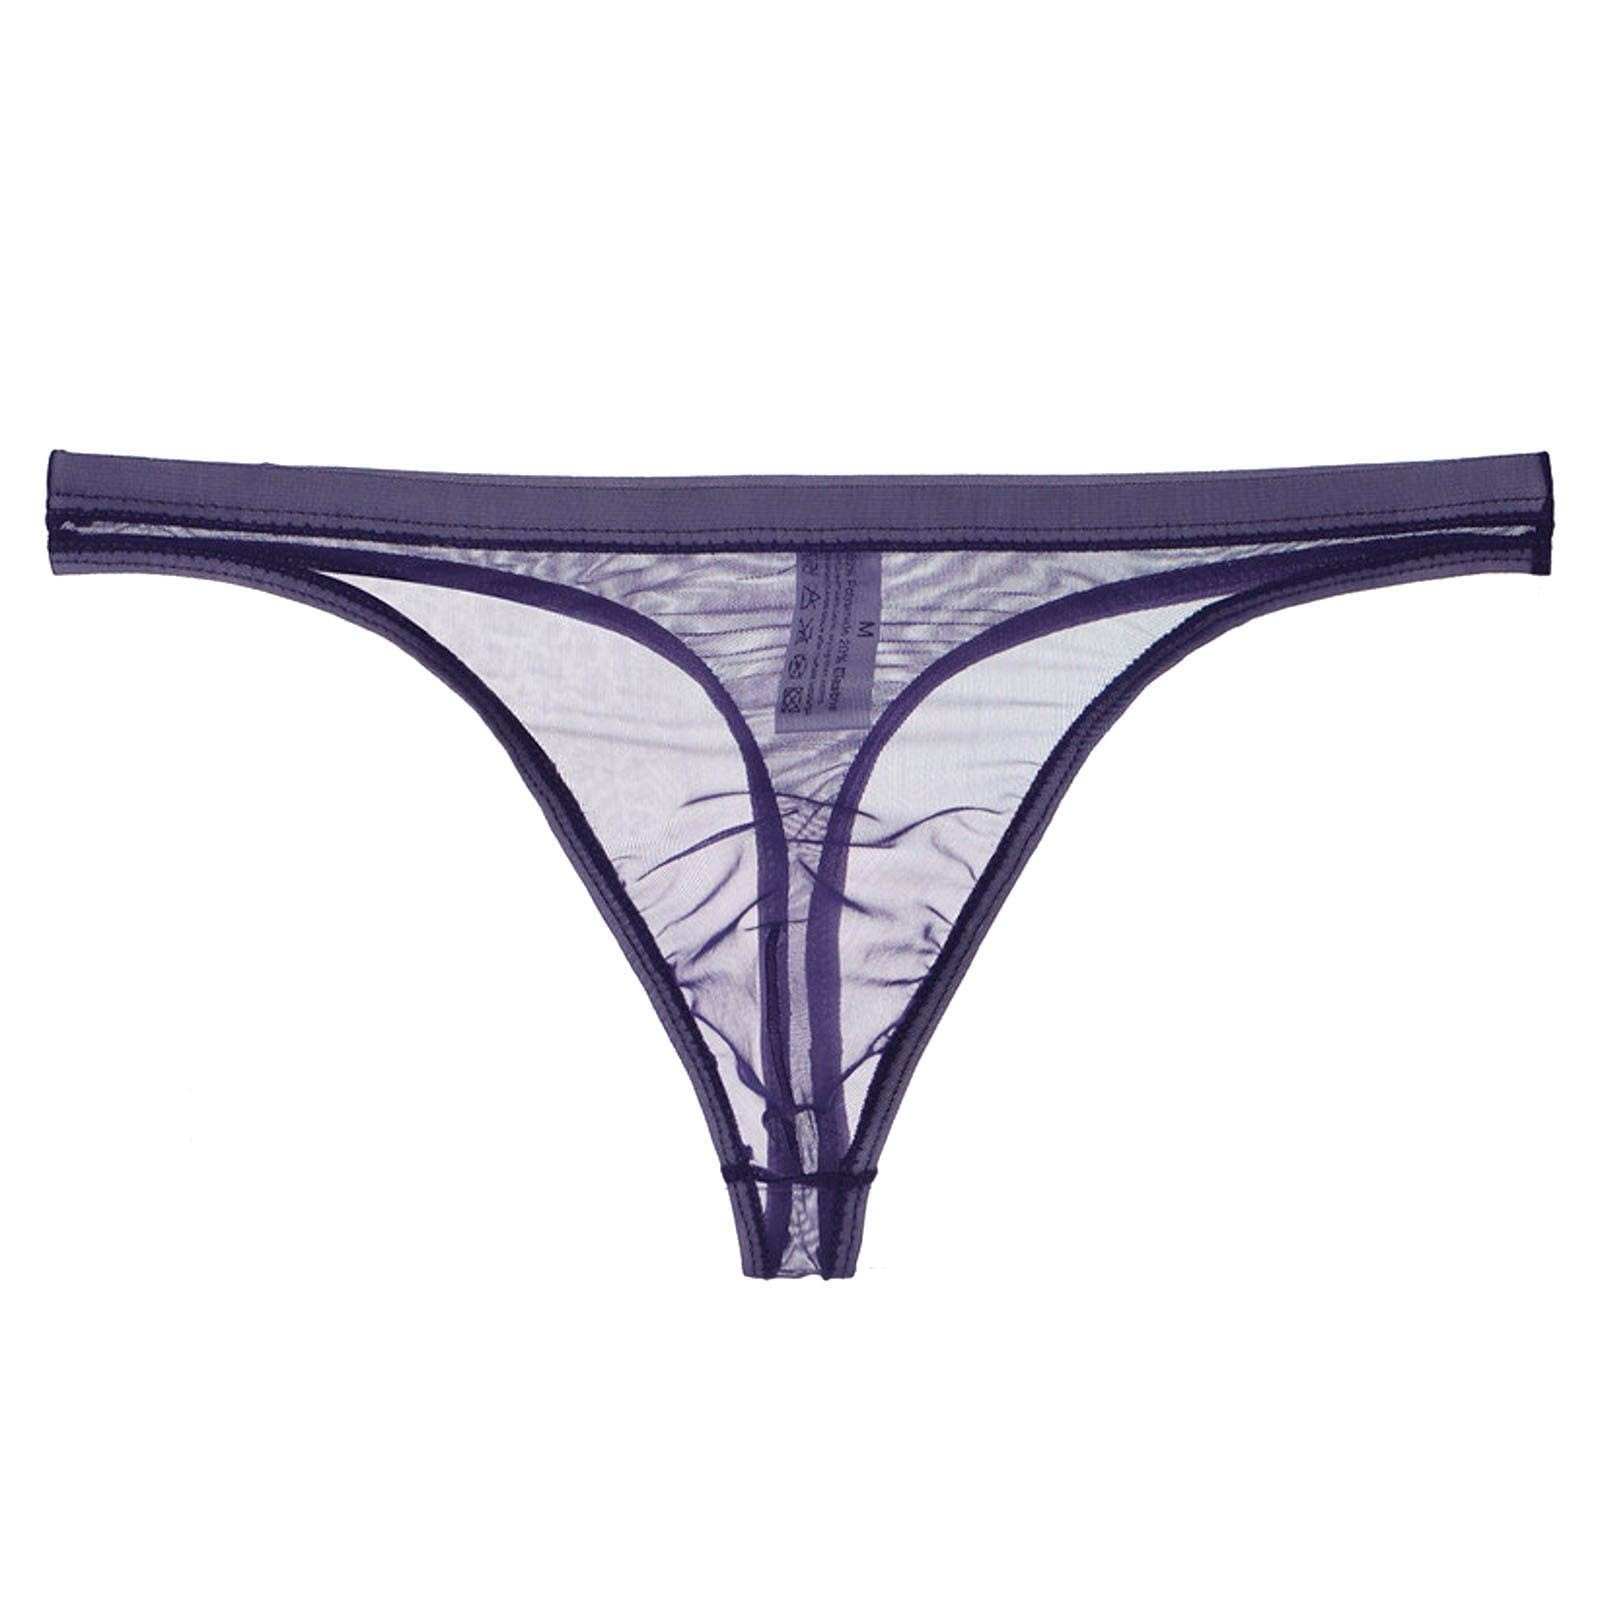 AOMPMSDX Mens Swimming Trunks Ransparent Thong Thin Mesh Underwear Fun ...